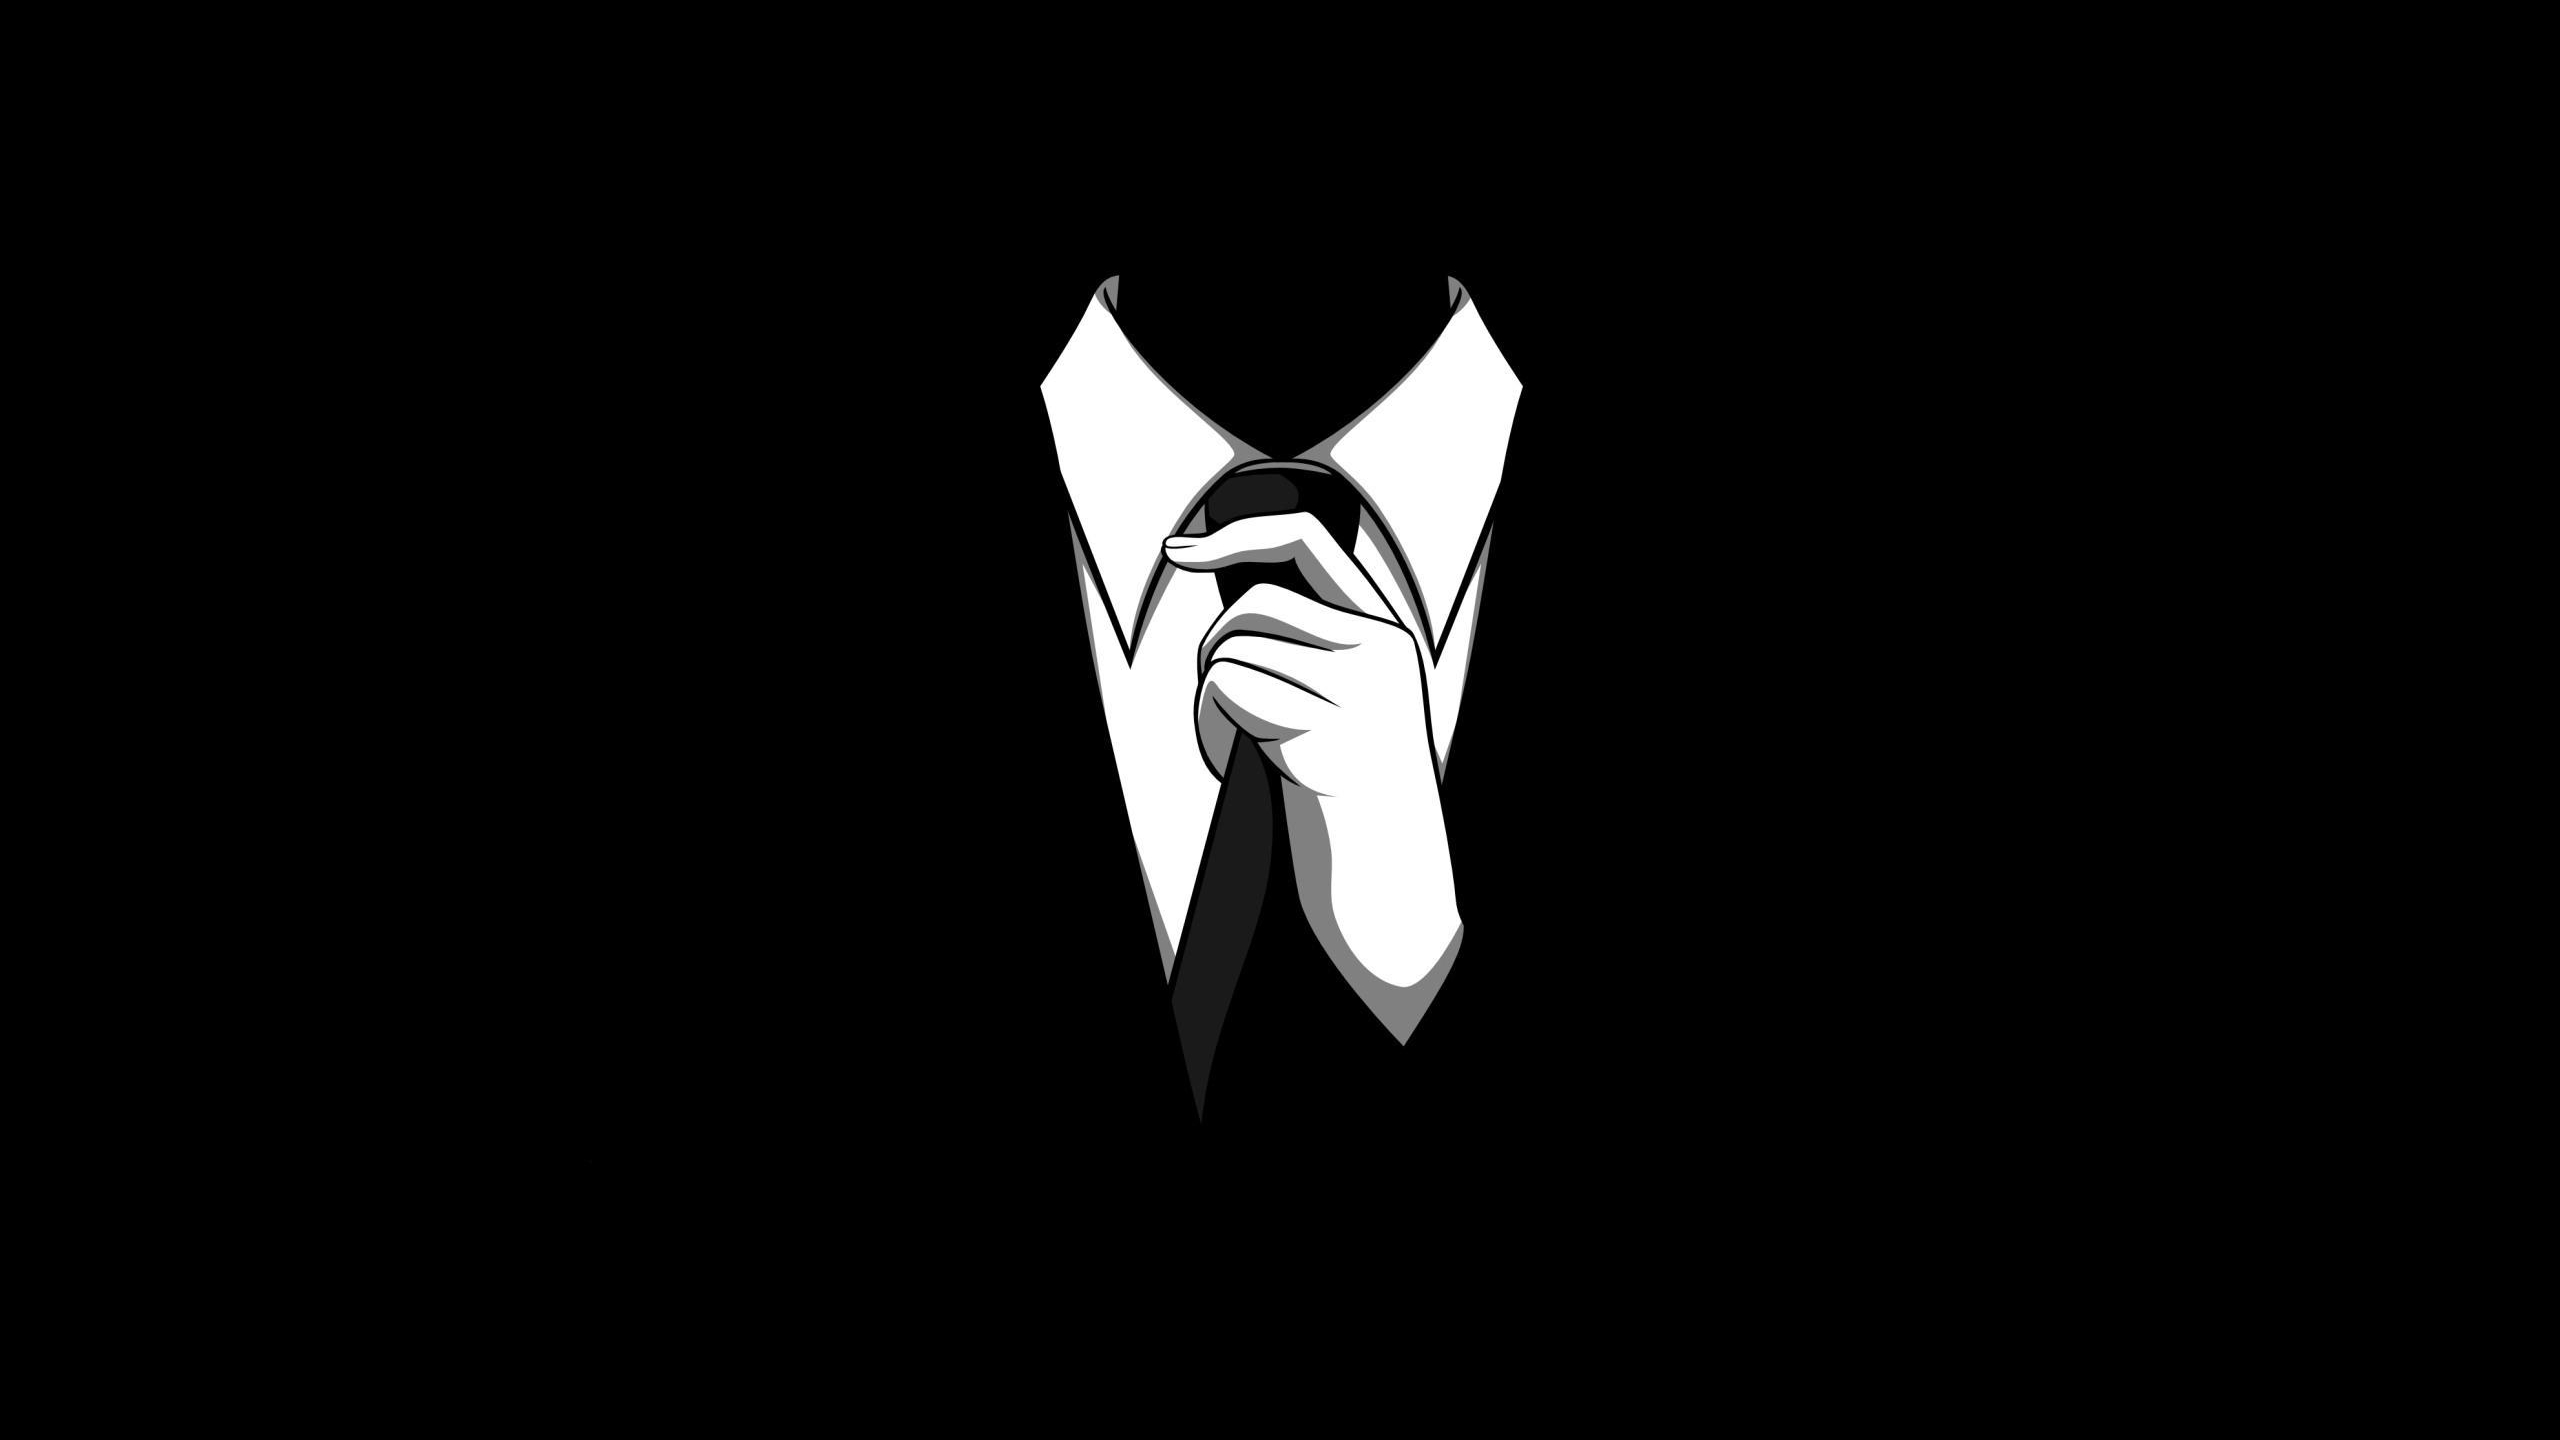 Anonymous Black Tie Monochrome Background Wallpaper